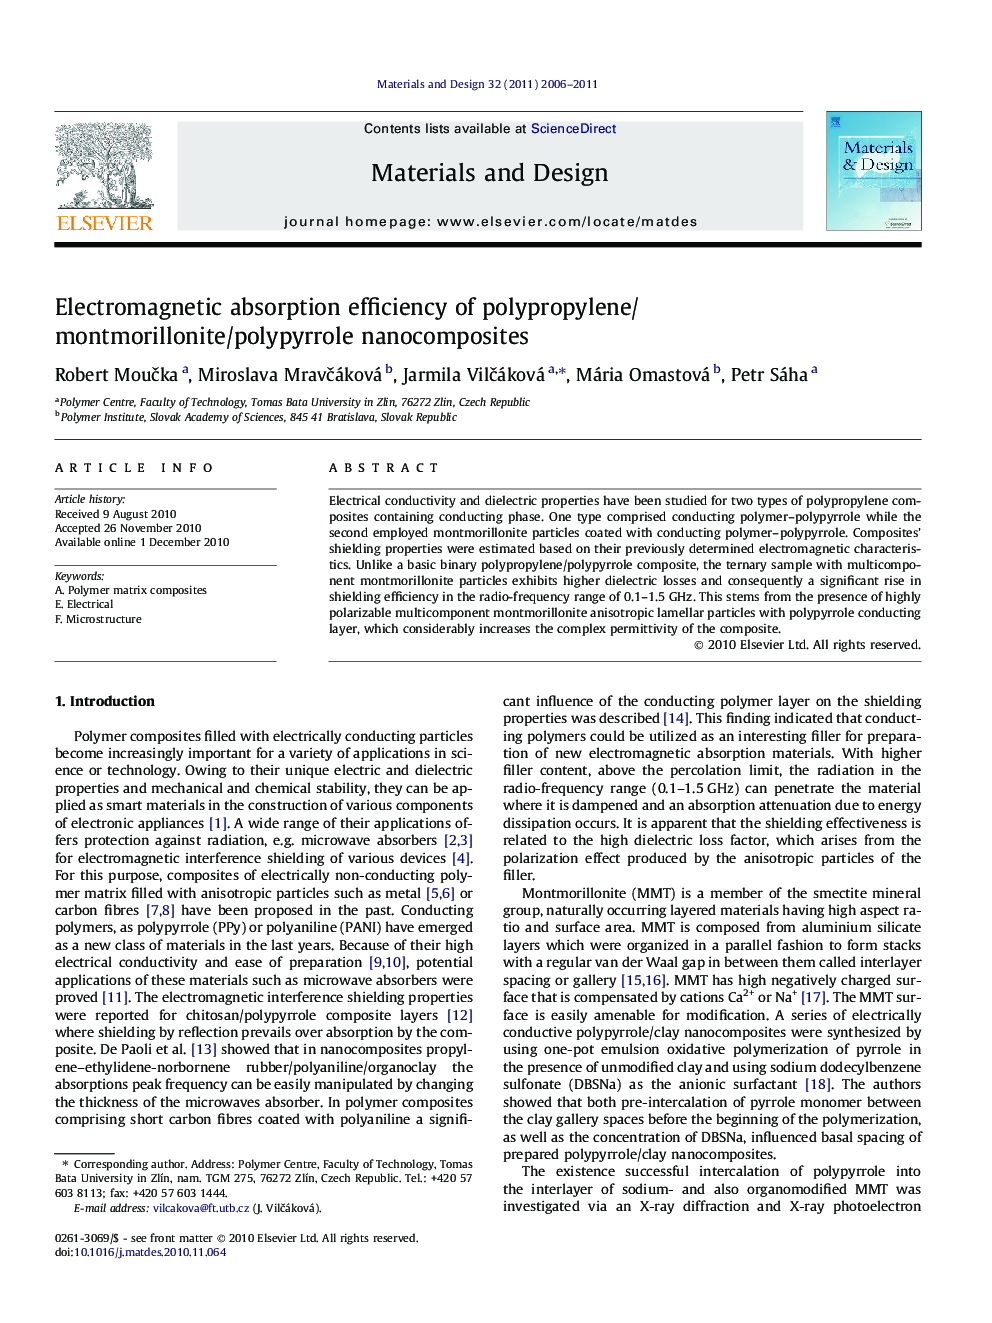 Electromagnetic absorption efficiency of polypropylene/montmorillonite/polypyrrole nanocomposites